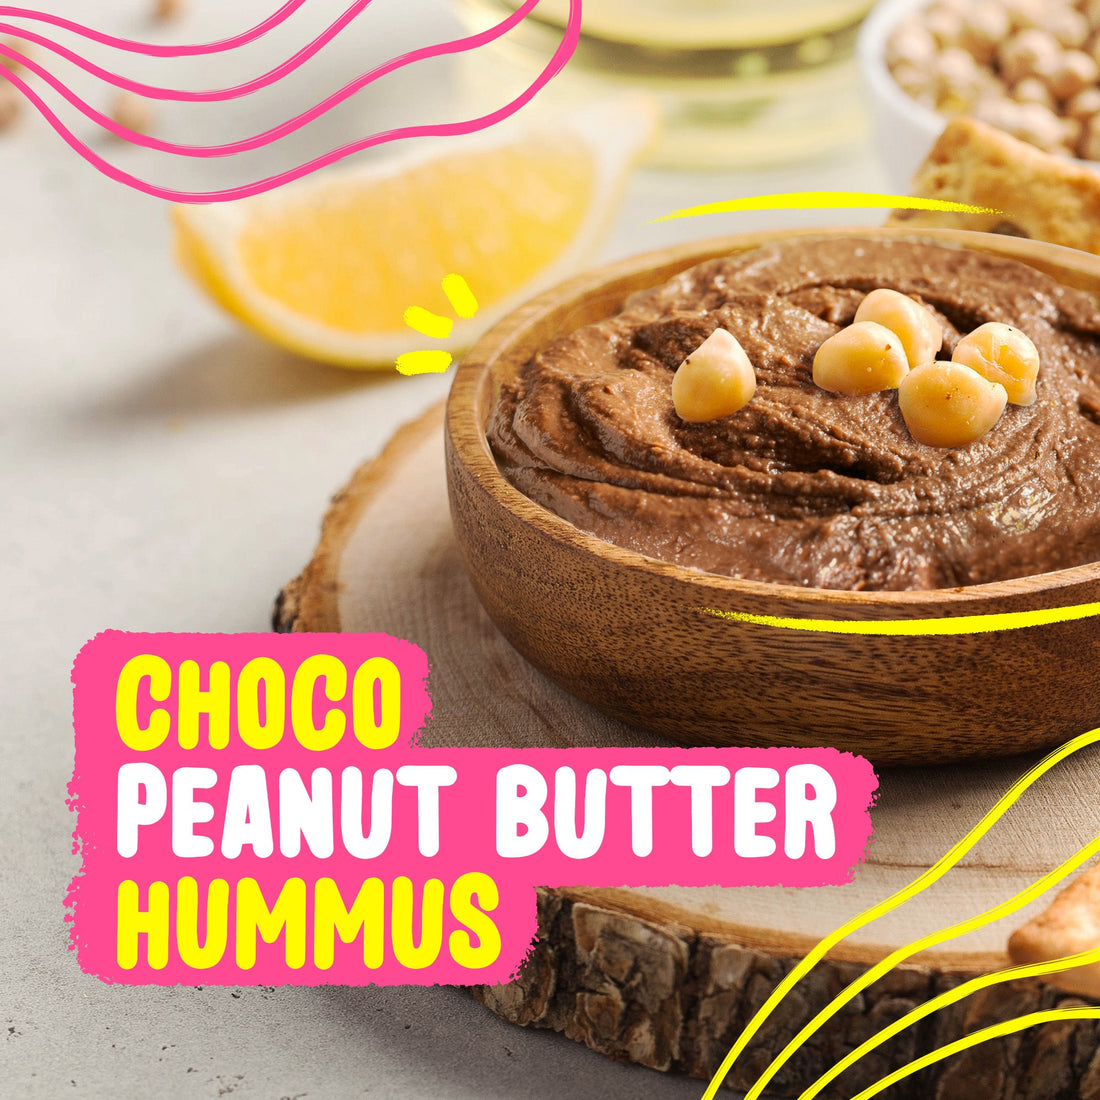 Choco Peanut Butter Hummus